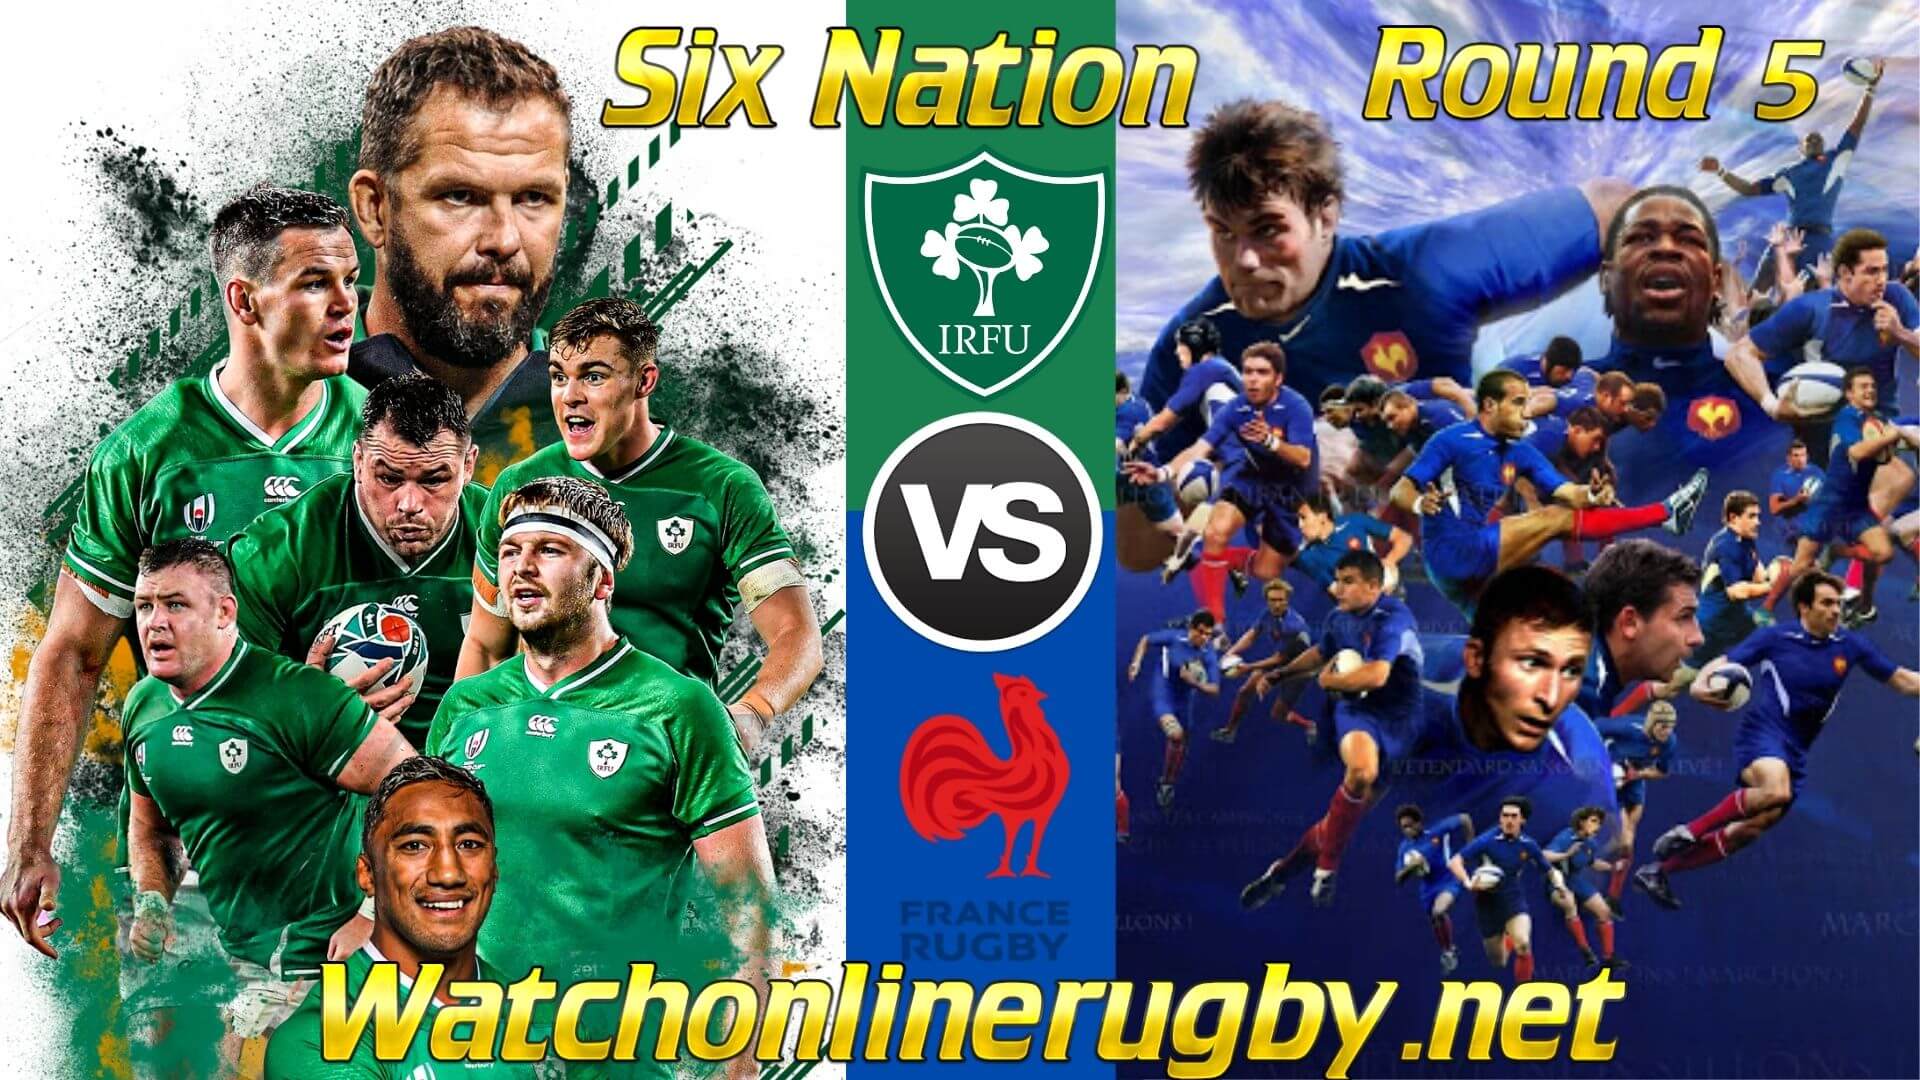 Ireland vs France Six Nations 2020 RD 5